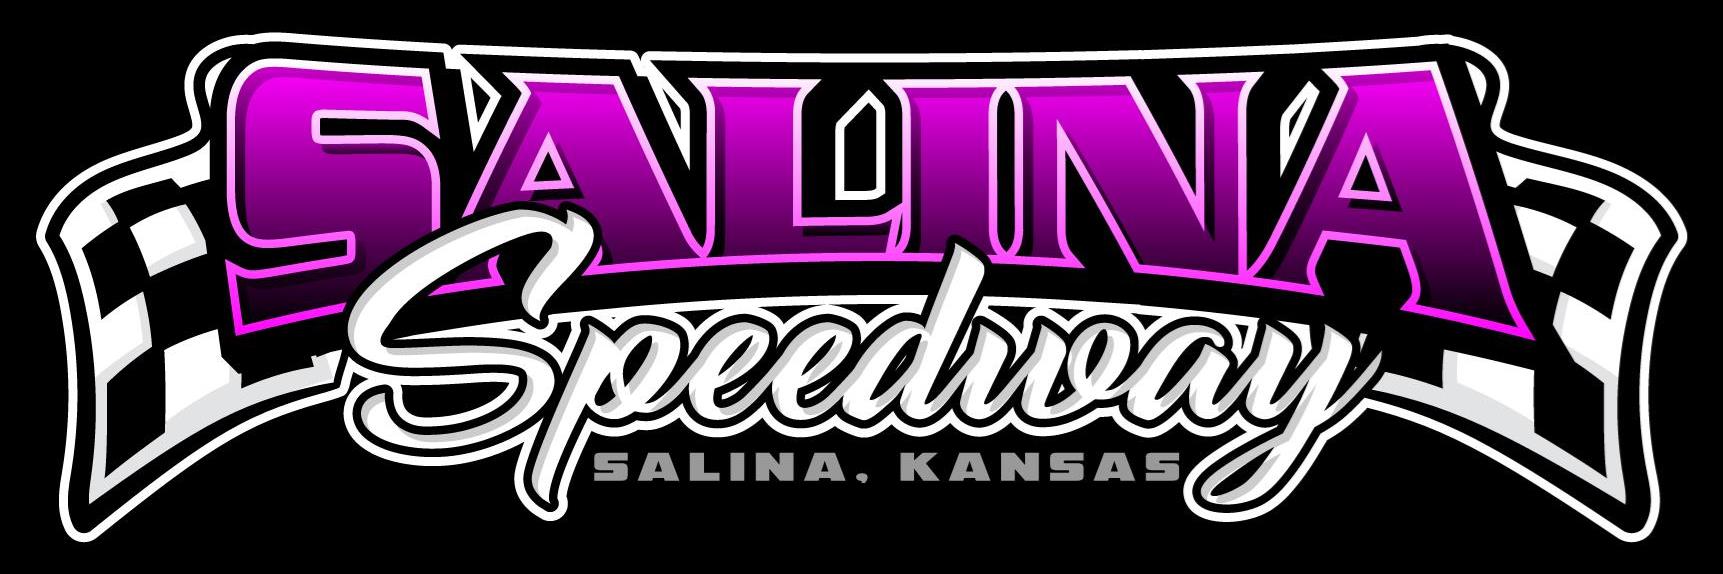 9/27/2019 - Salina Speedway